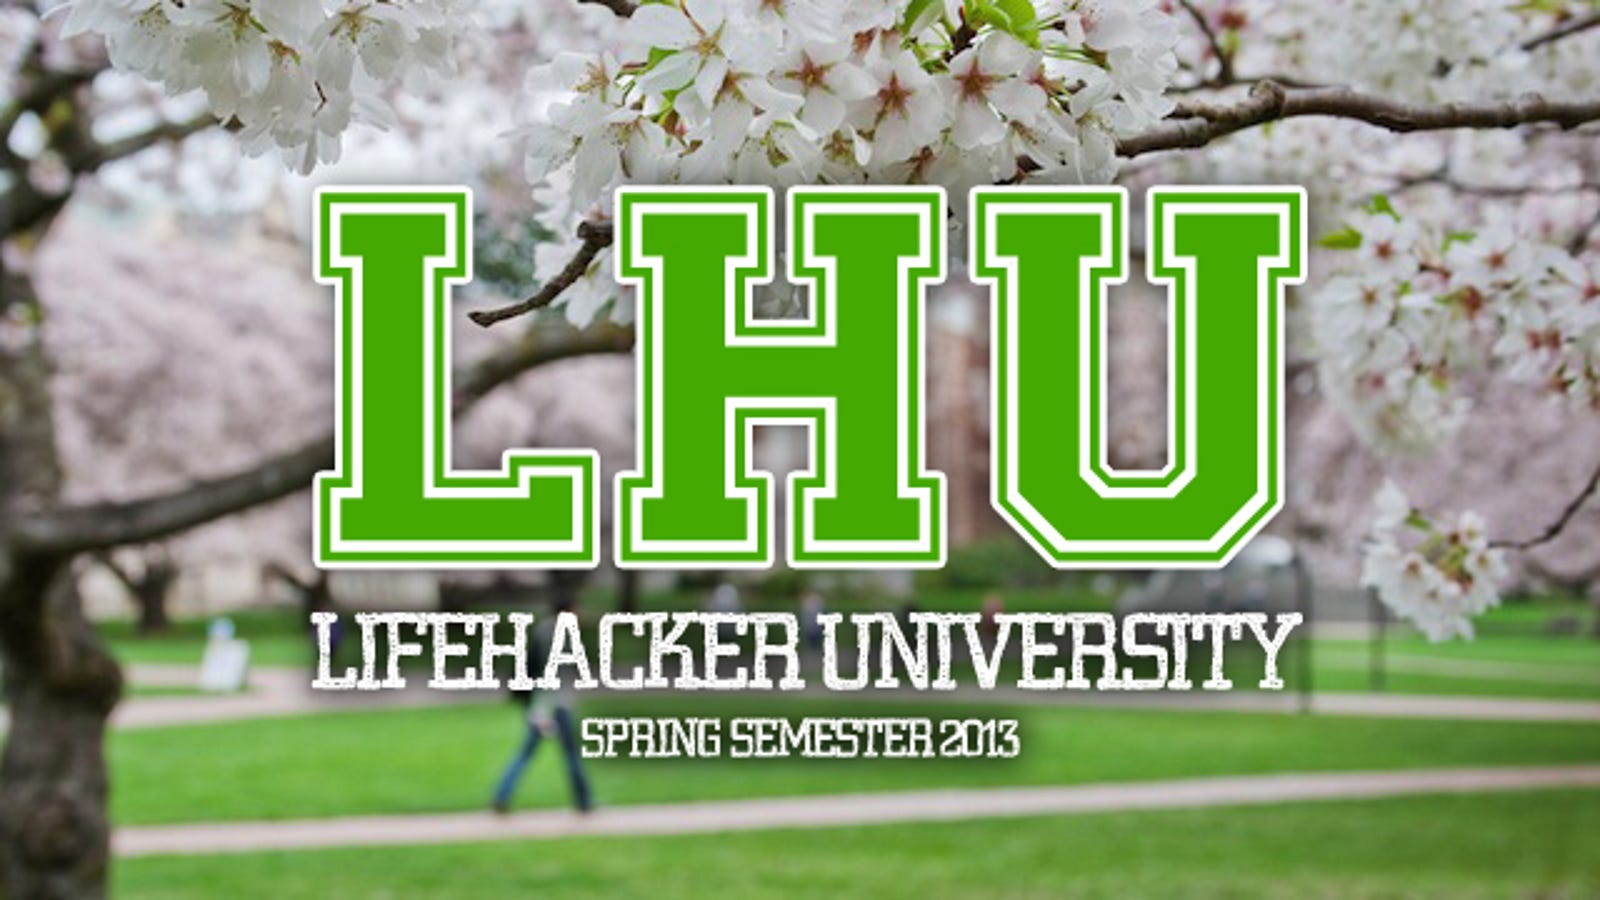 Plan Your Free Online Education at Lifehacker U Spring Semester 2013